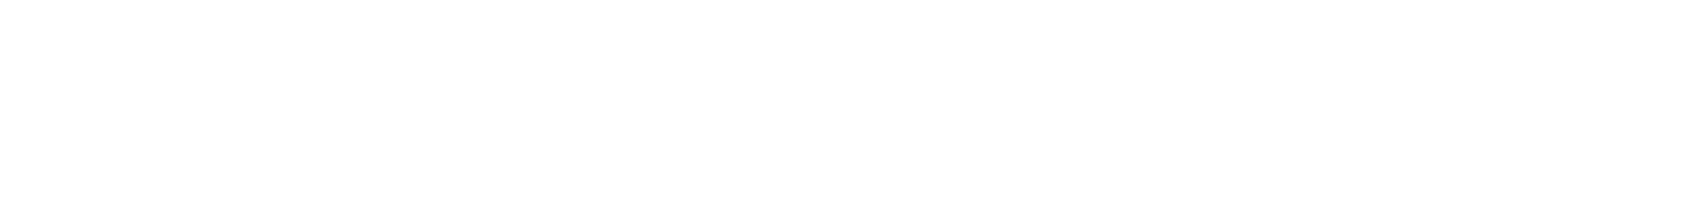 Facebook e Instagram for Business